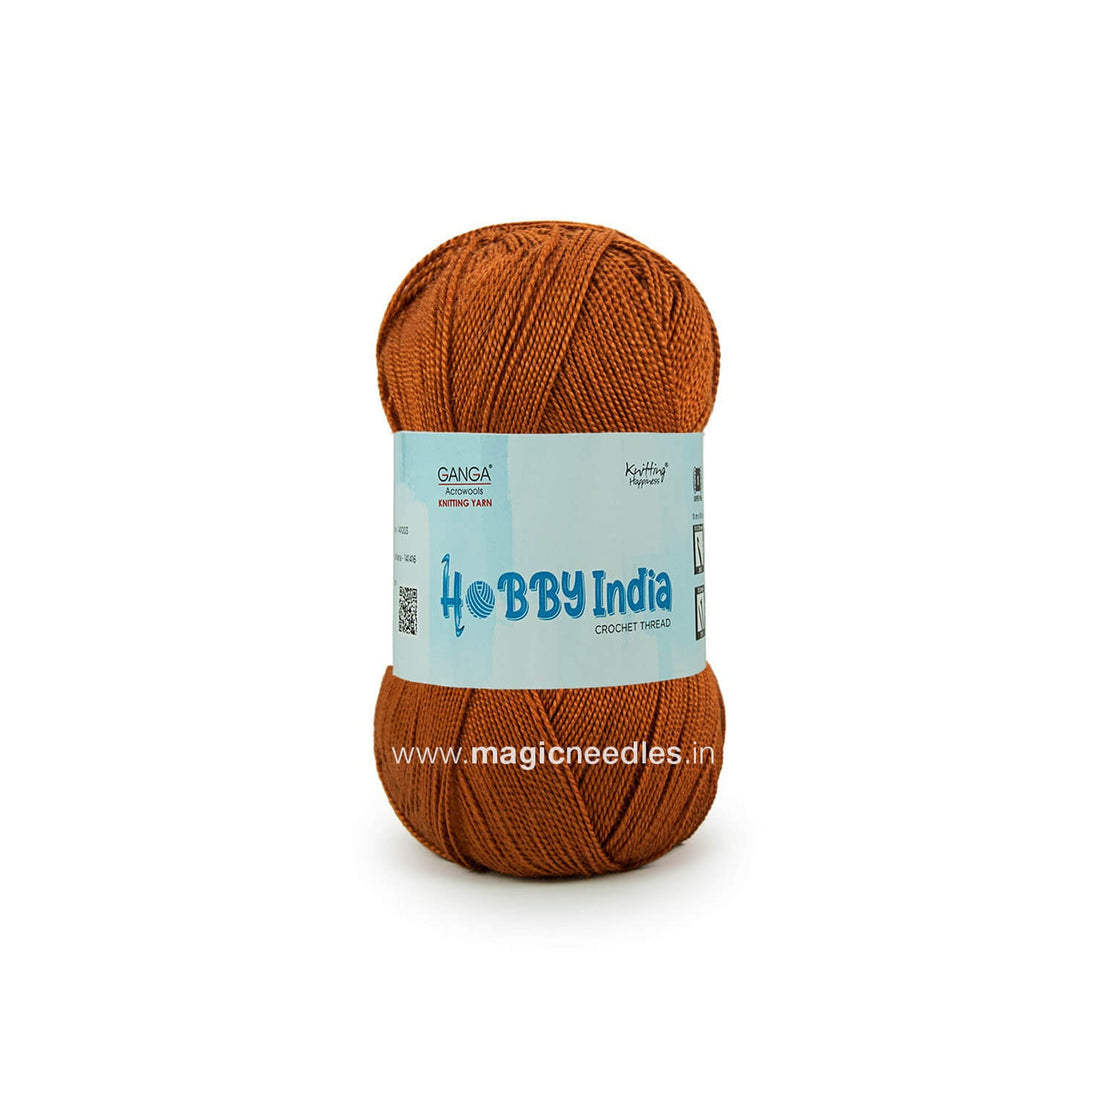 Ganga Hobby India Crochet Thread - Brown 16